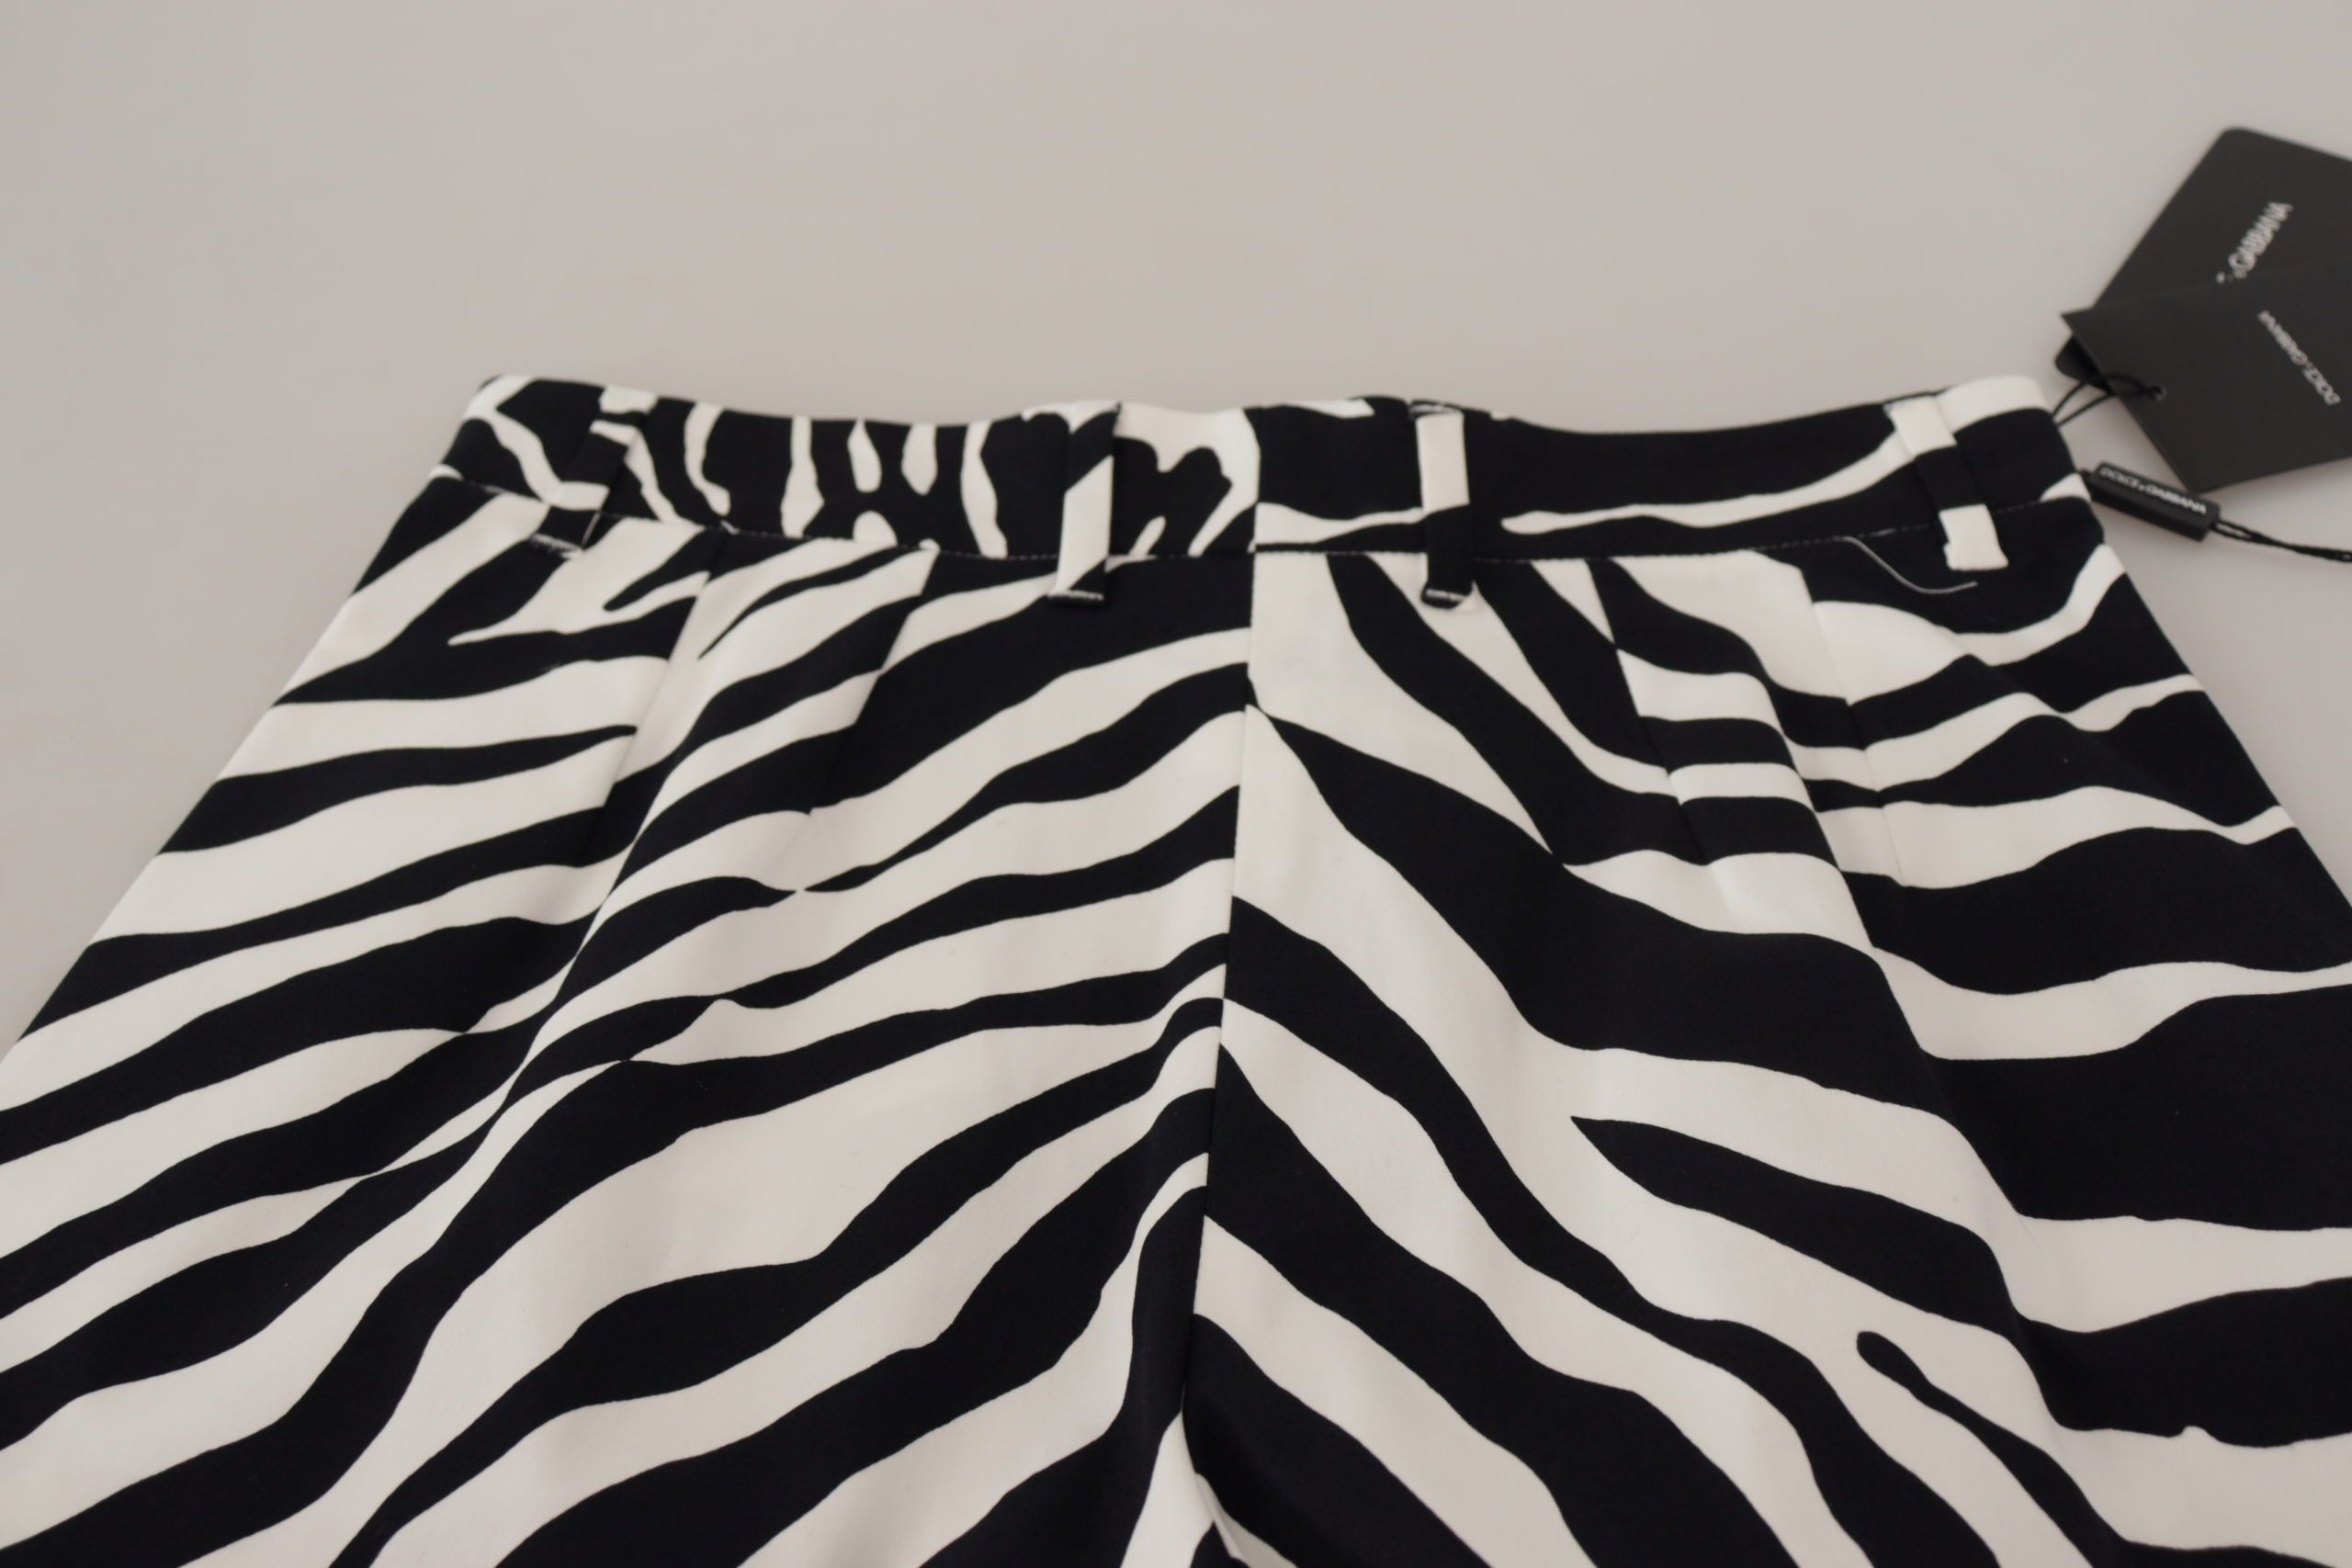 Dolce & Gabbana Zebra Print Mid Waist Hot Pants